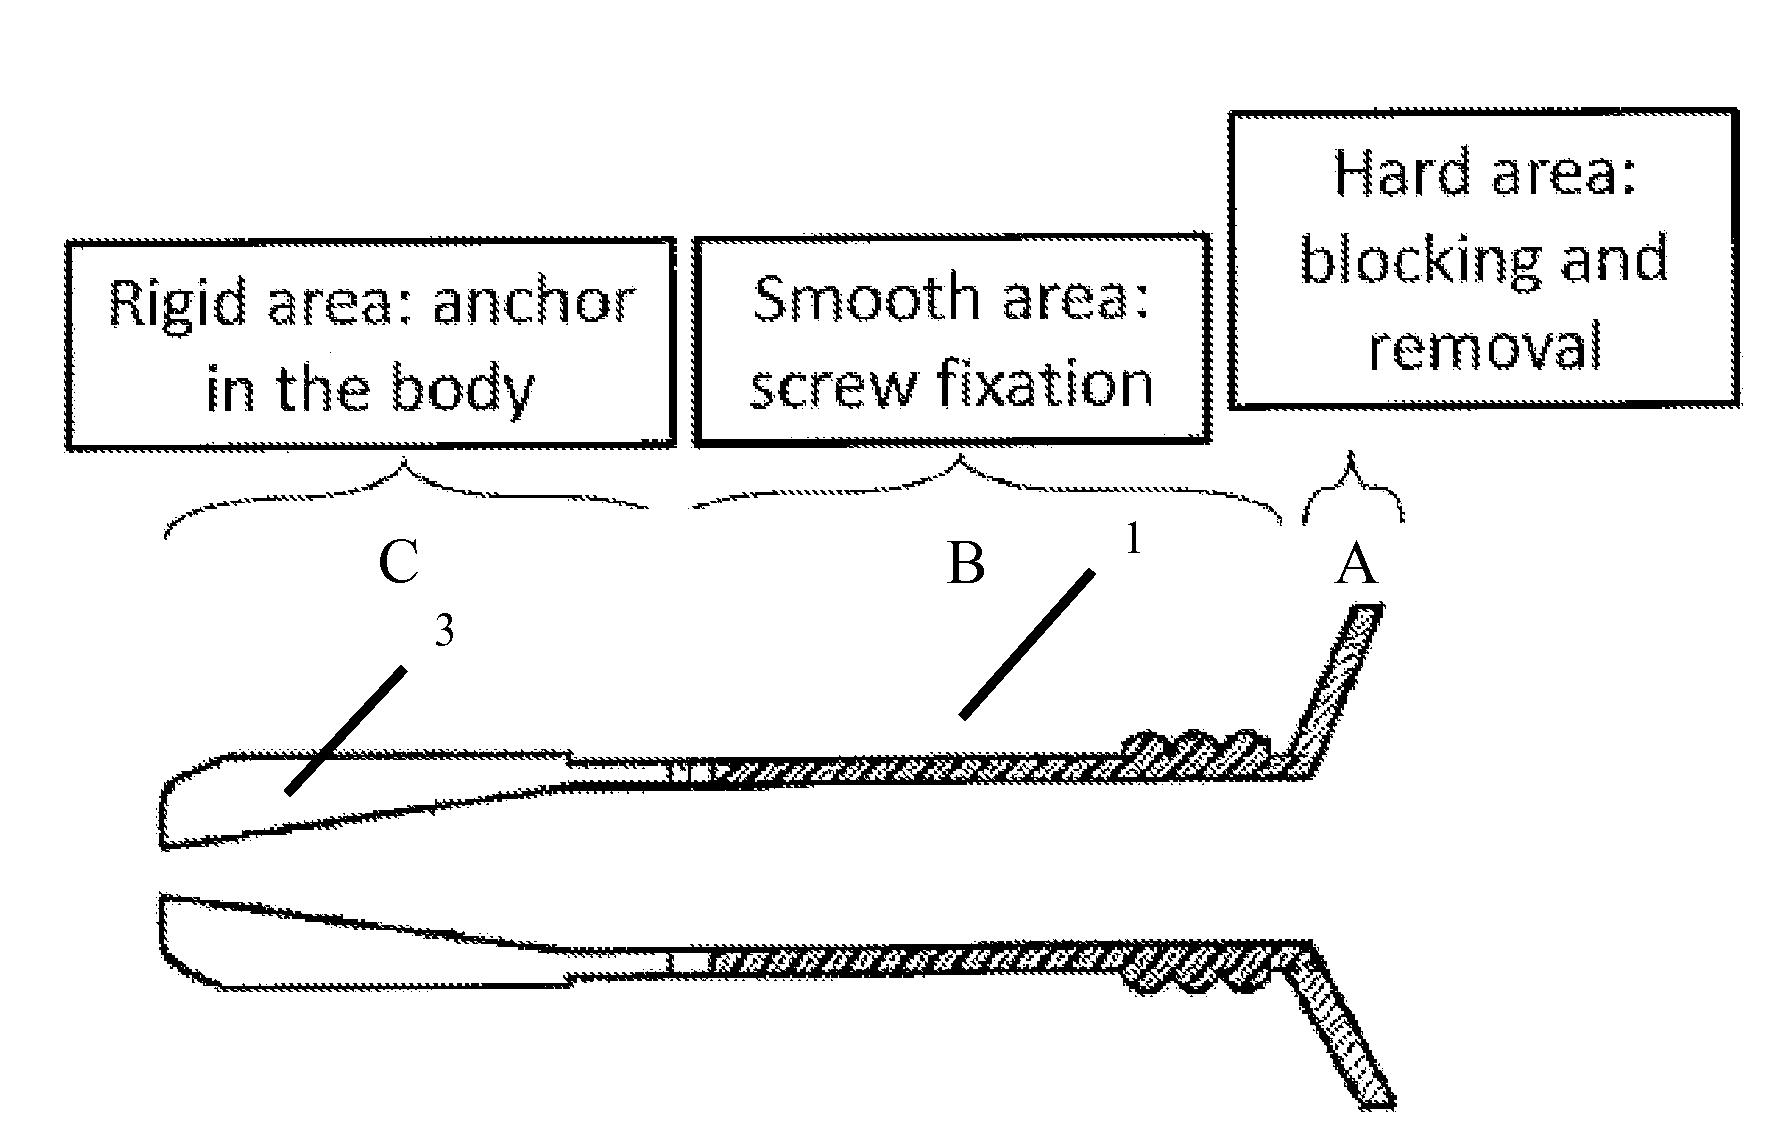 Universal anchor for bone fixation